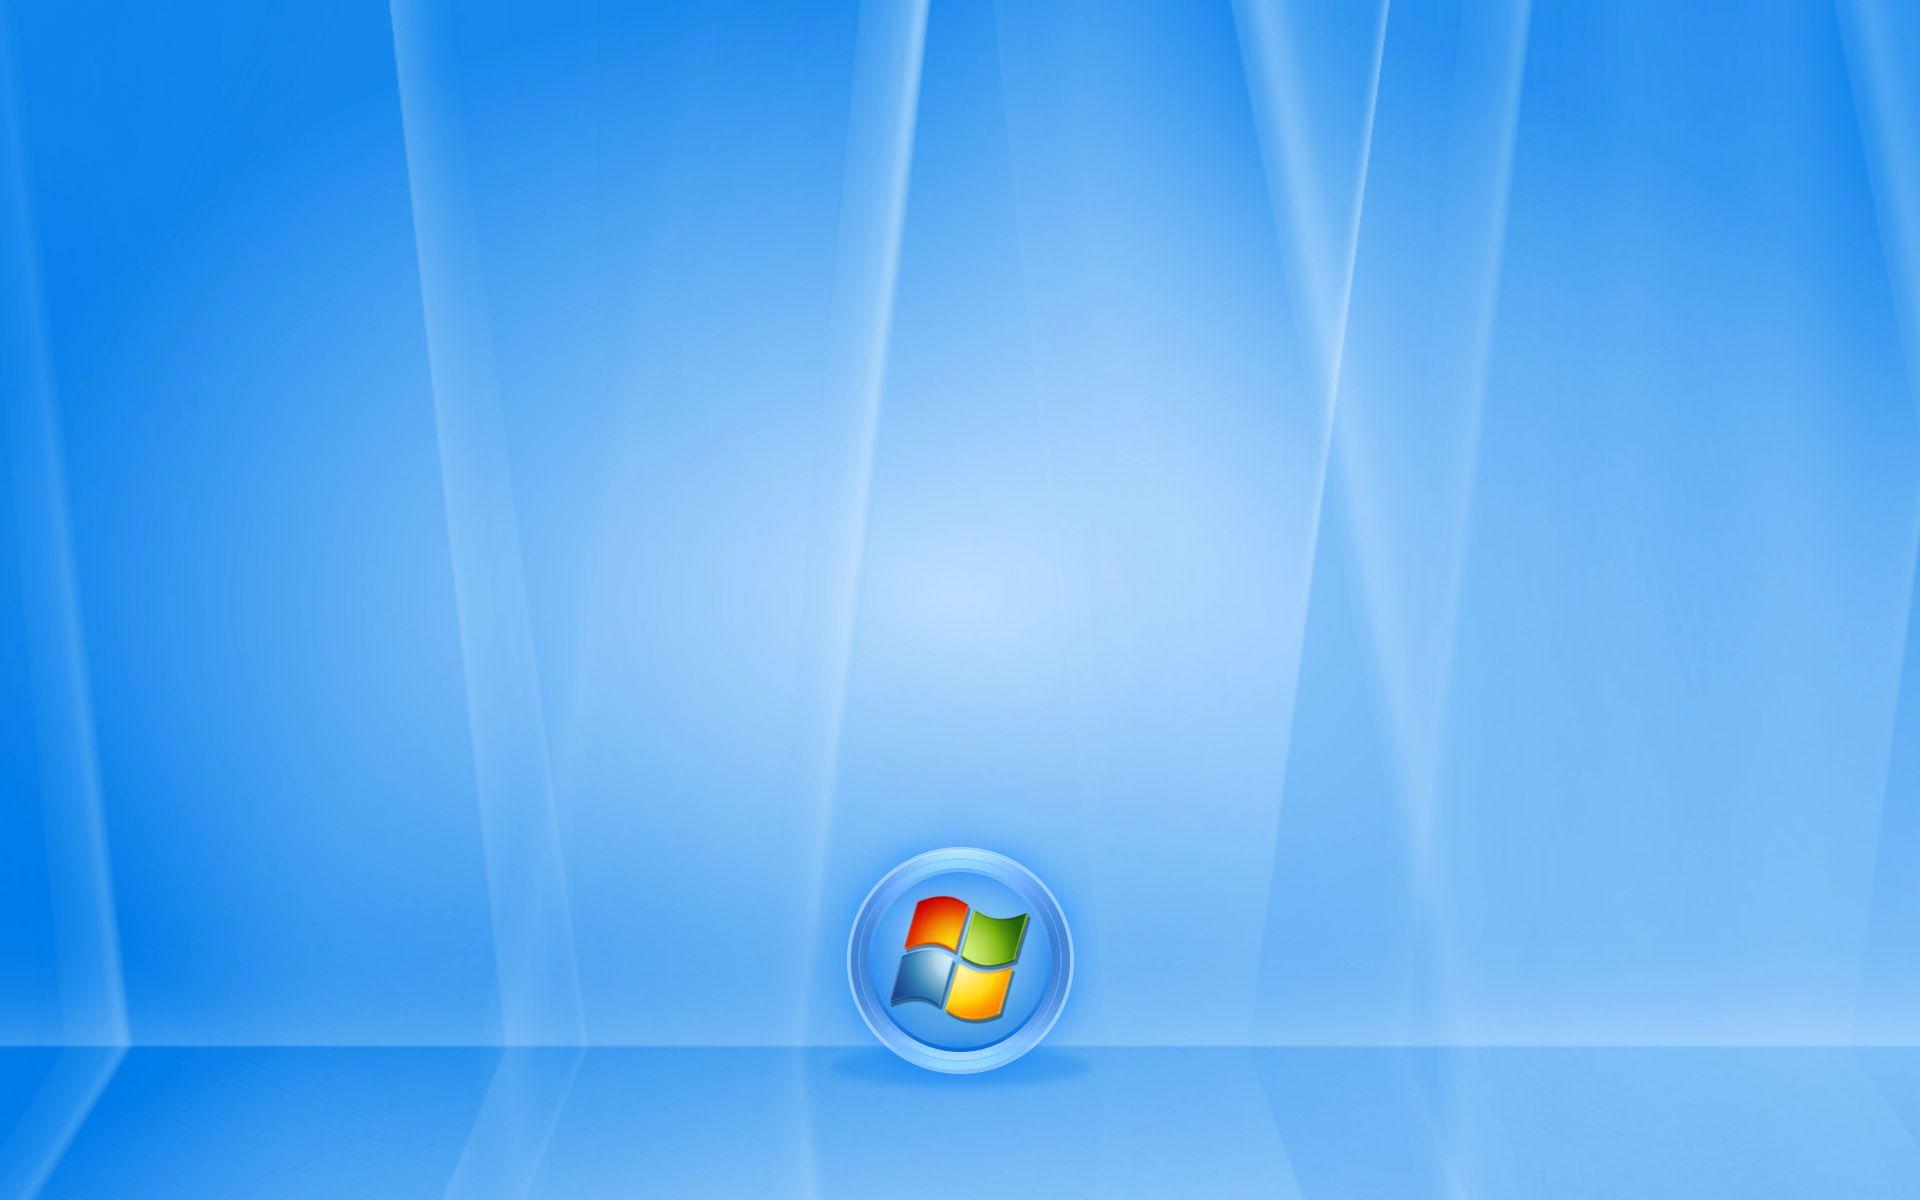 Windows Vista Wallpaper HD 1920 X 1200 70 of 118. phombo